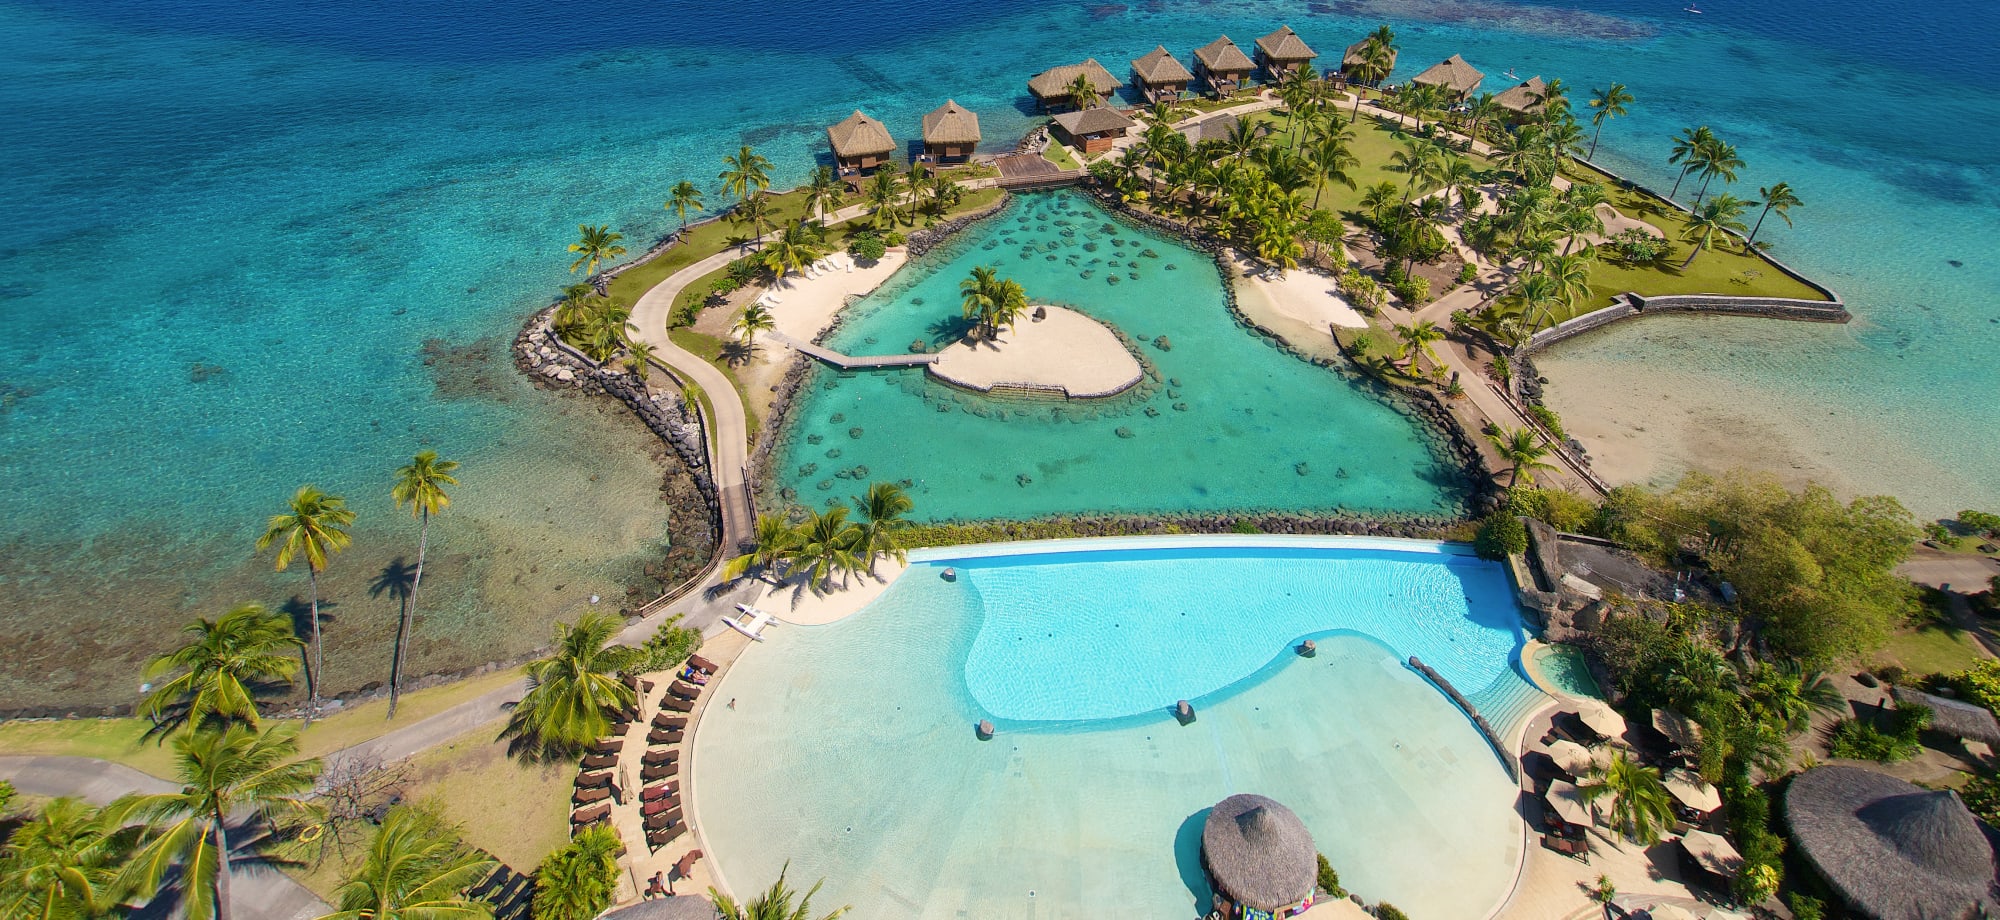 InterContinental Tahiti's pool overlooks a turquoise lagoon and overwater villas. 